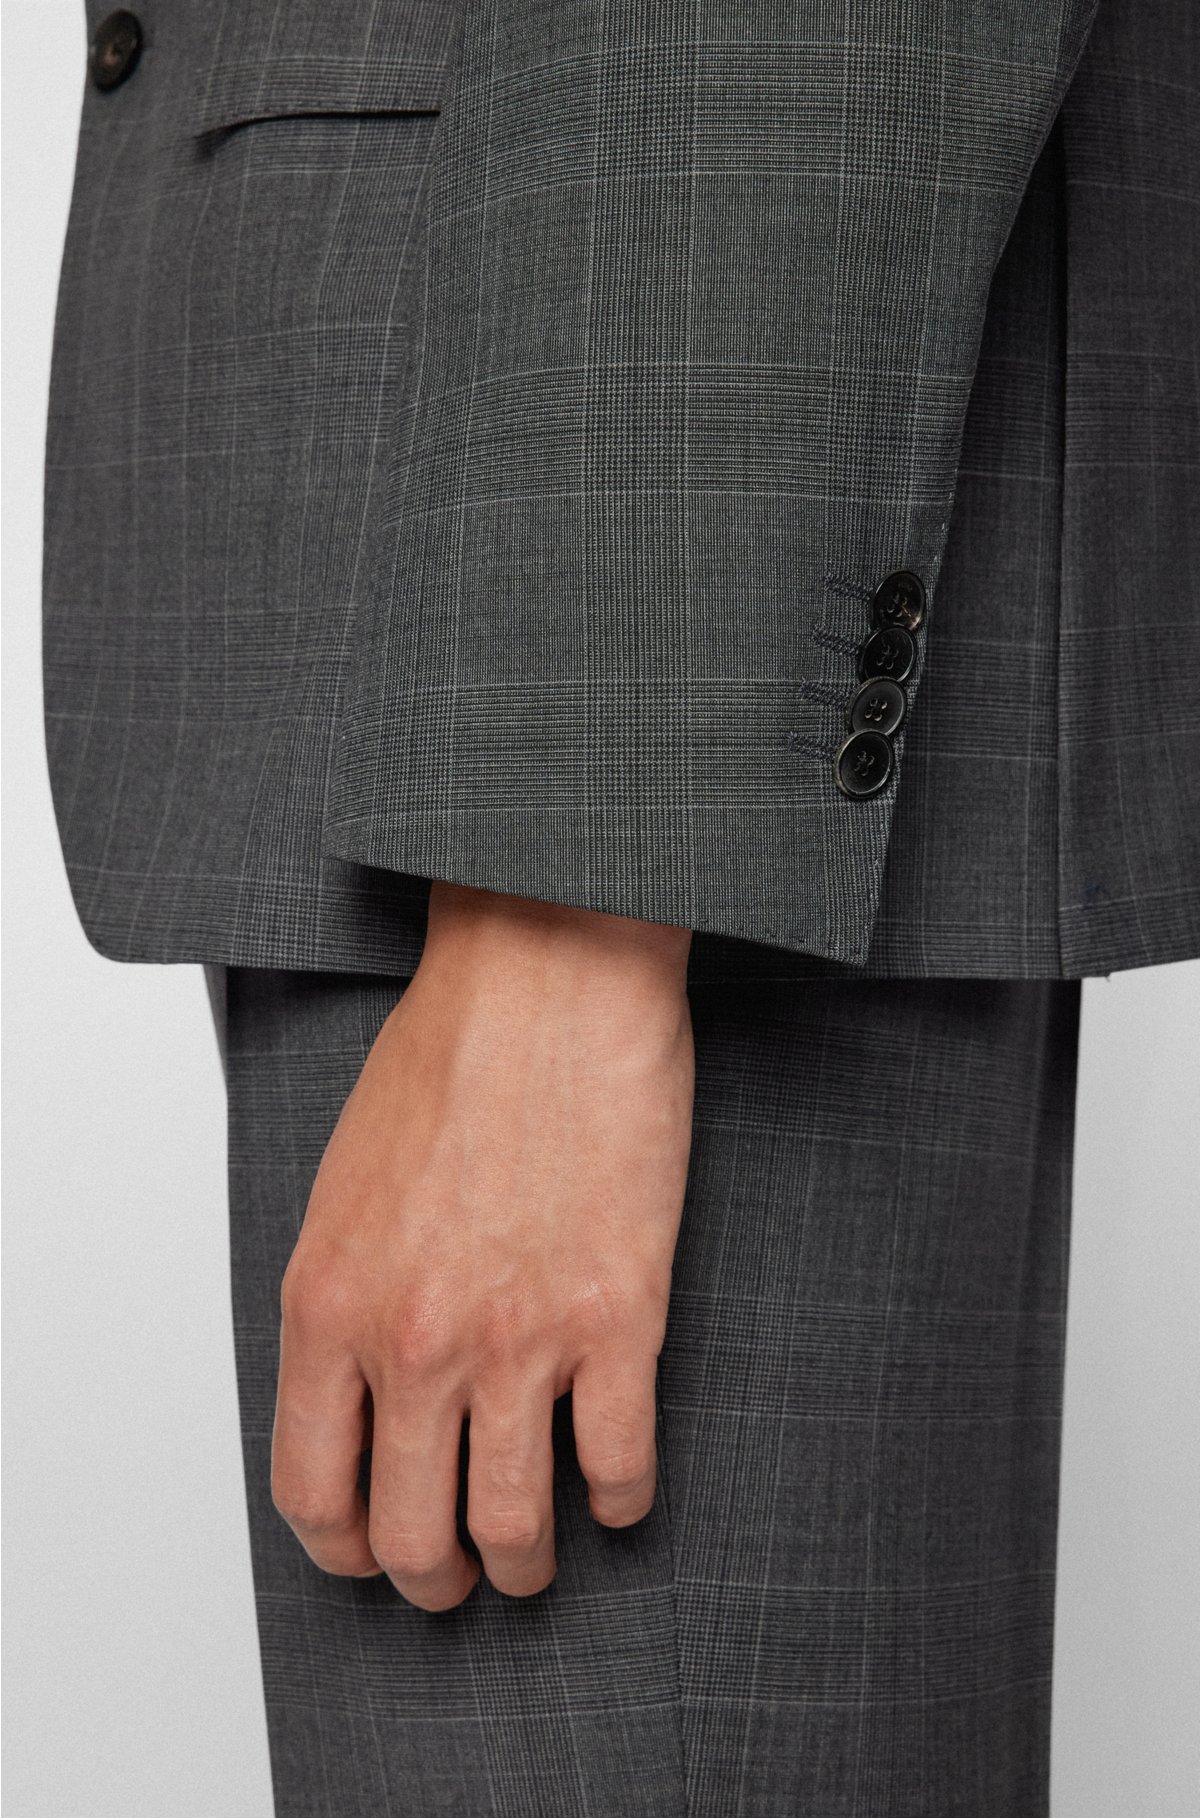 BOSS - Regular-fit suit in checked virgin wool